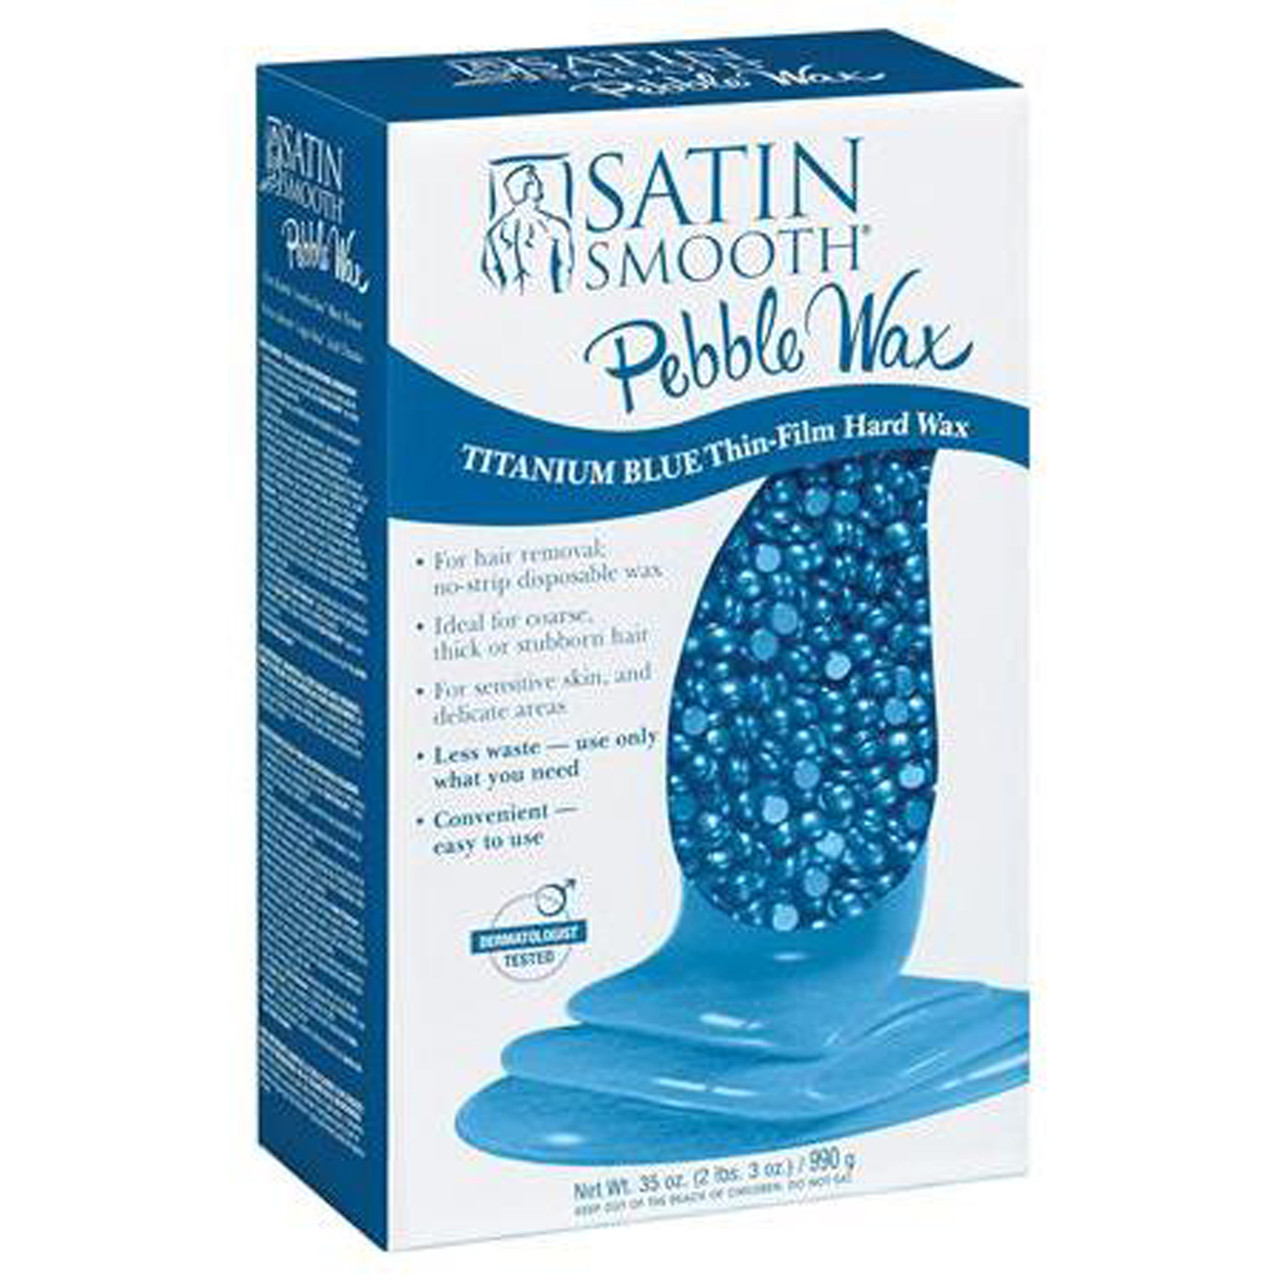 Satin Smooth Titanium Blue Thin Film Pebble Wax - 35 oz. ( 2 lbs. 3 oz.)/ 990 g